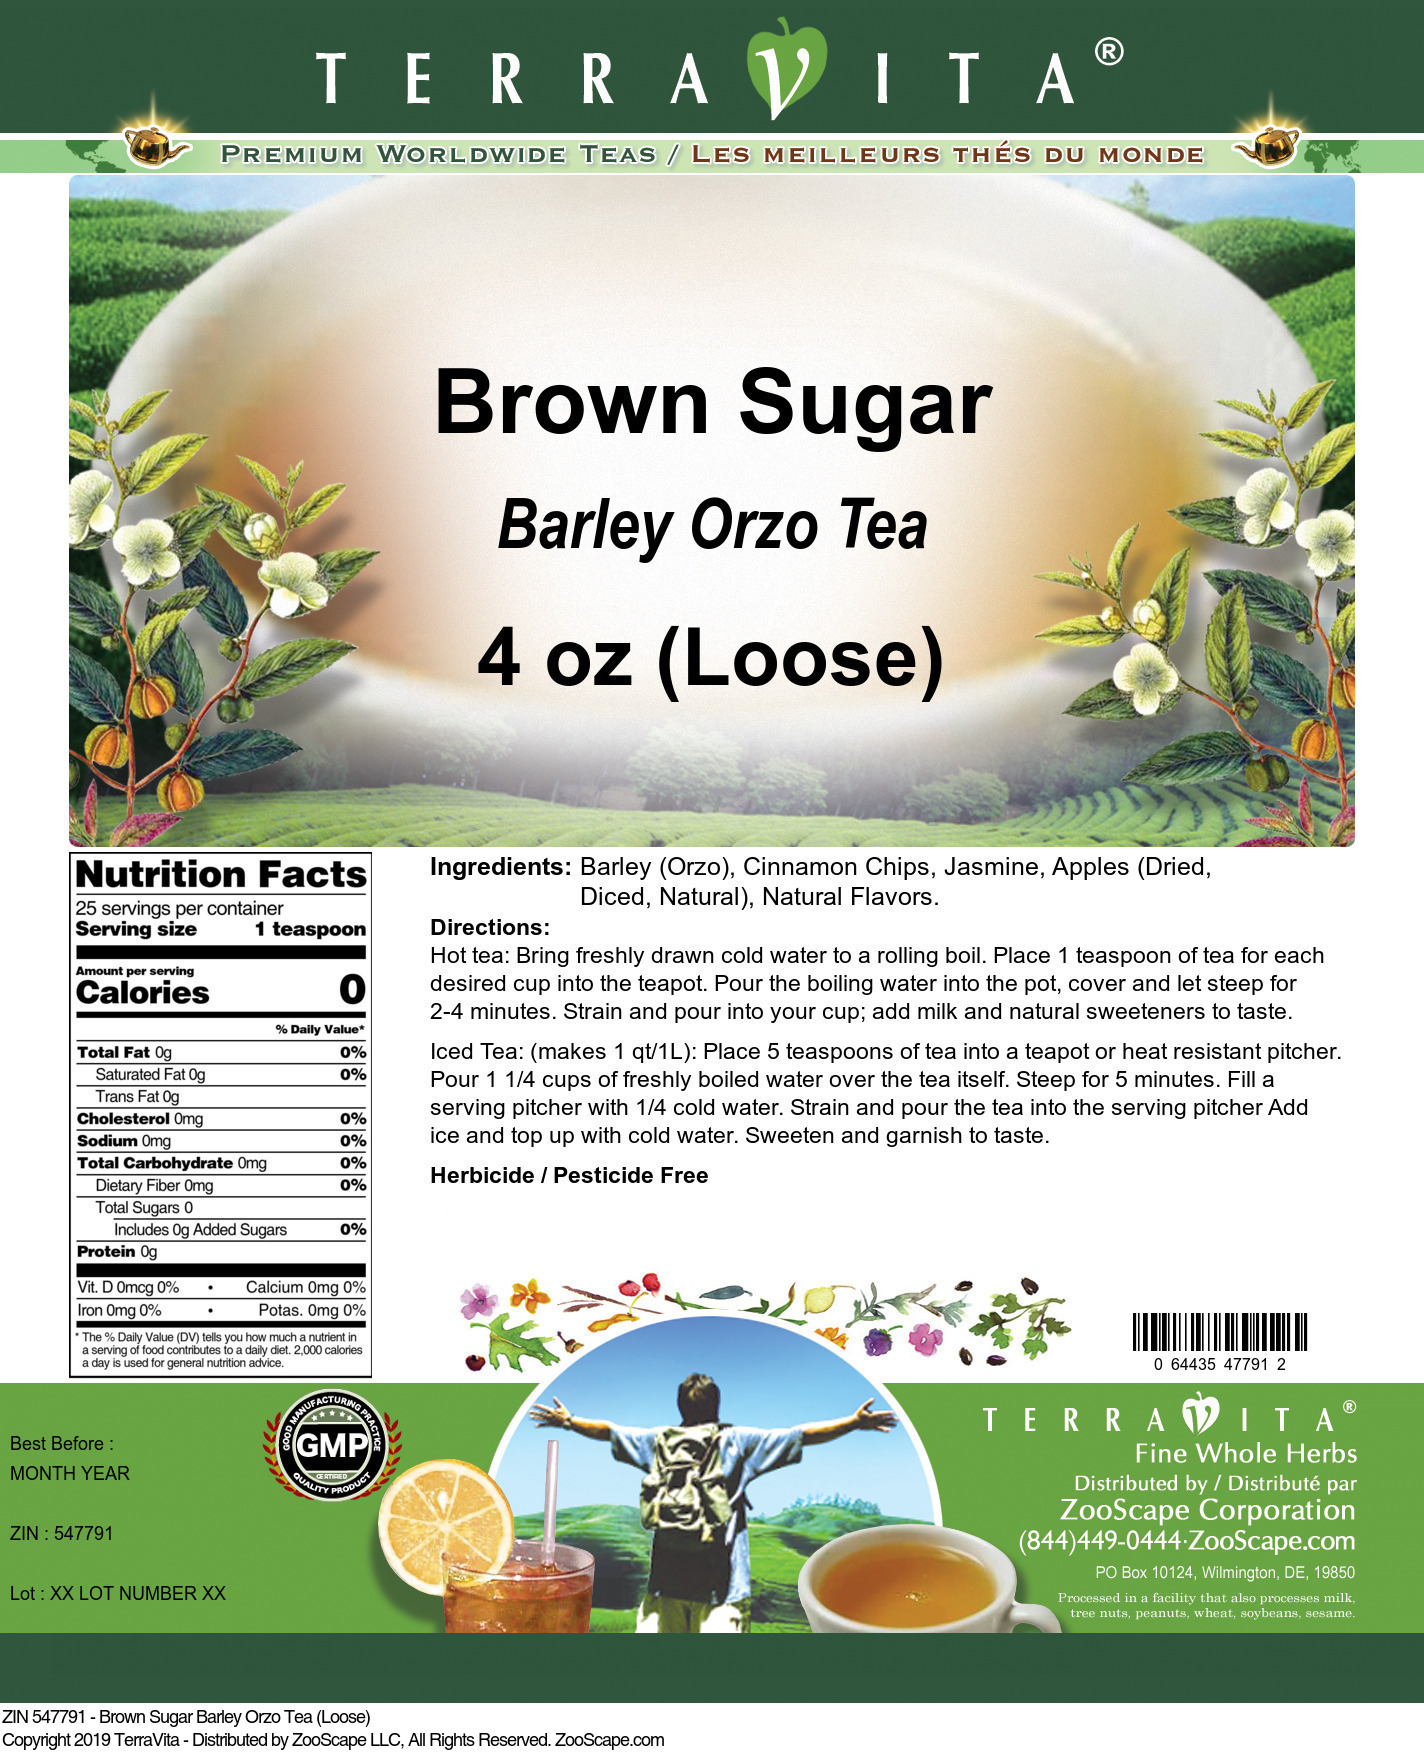 Brown Sugar Barley Orzo Tea (Loose) - Label